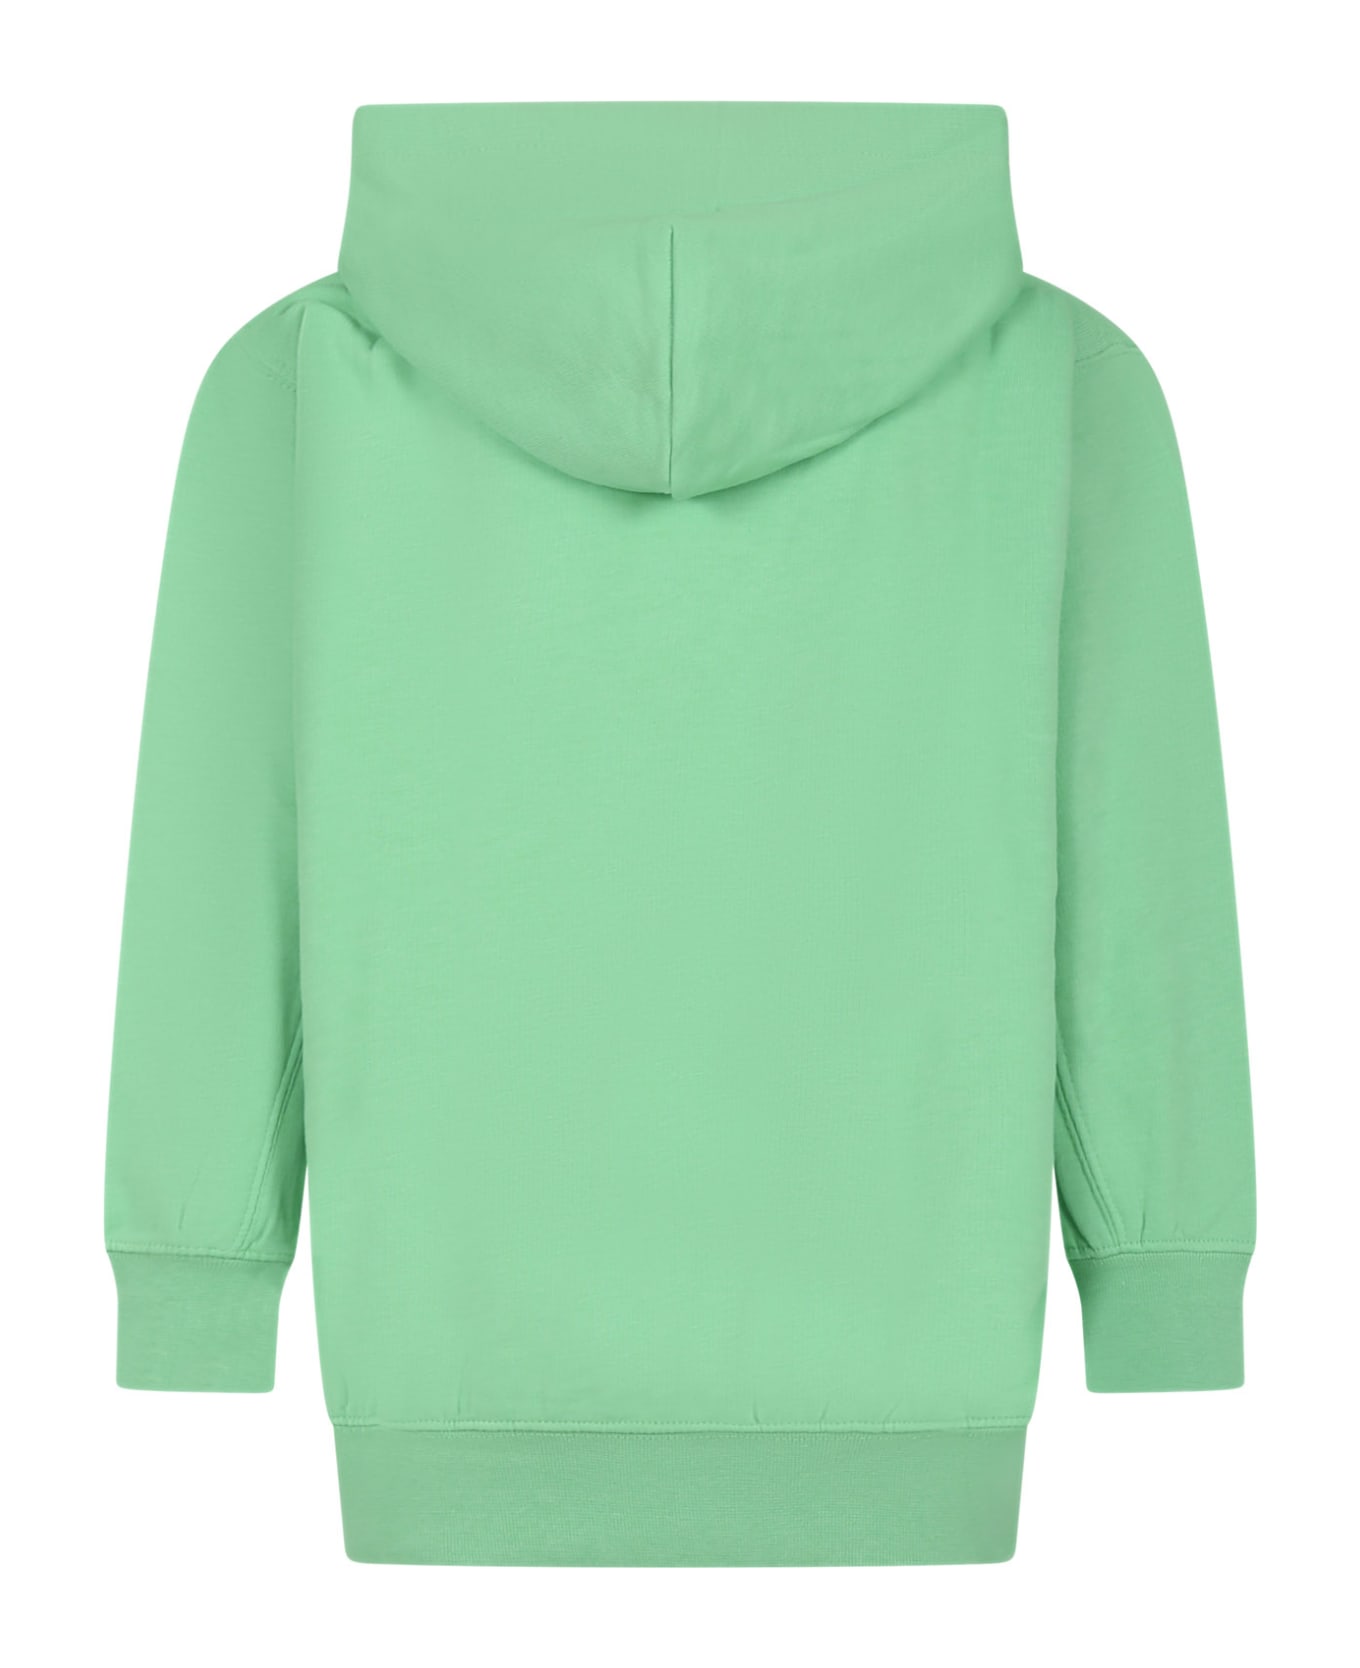 Molo Green Sweatshirt For Boy With Print - Green